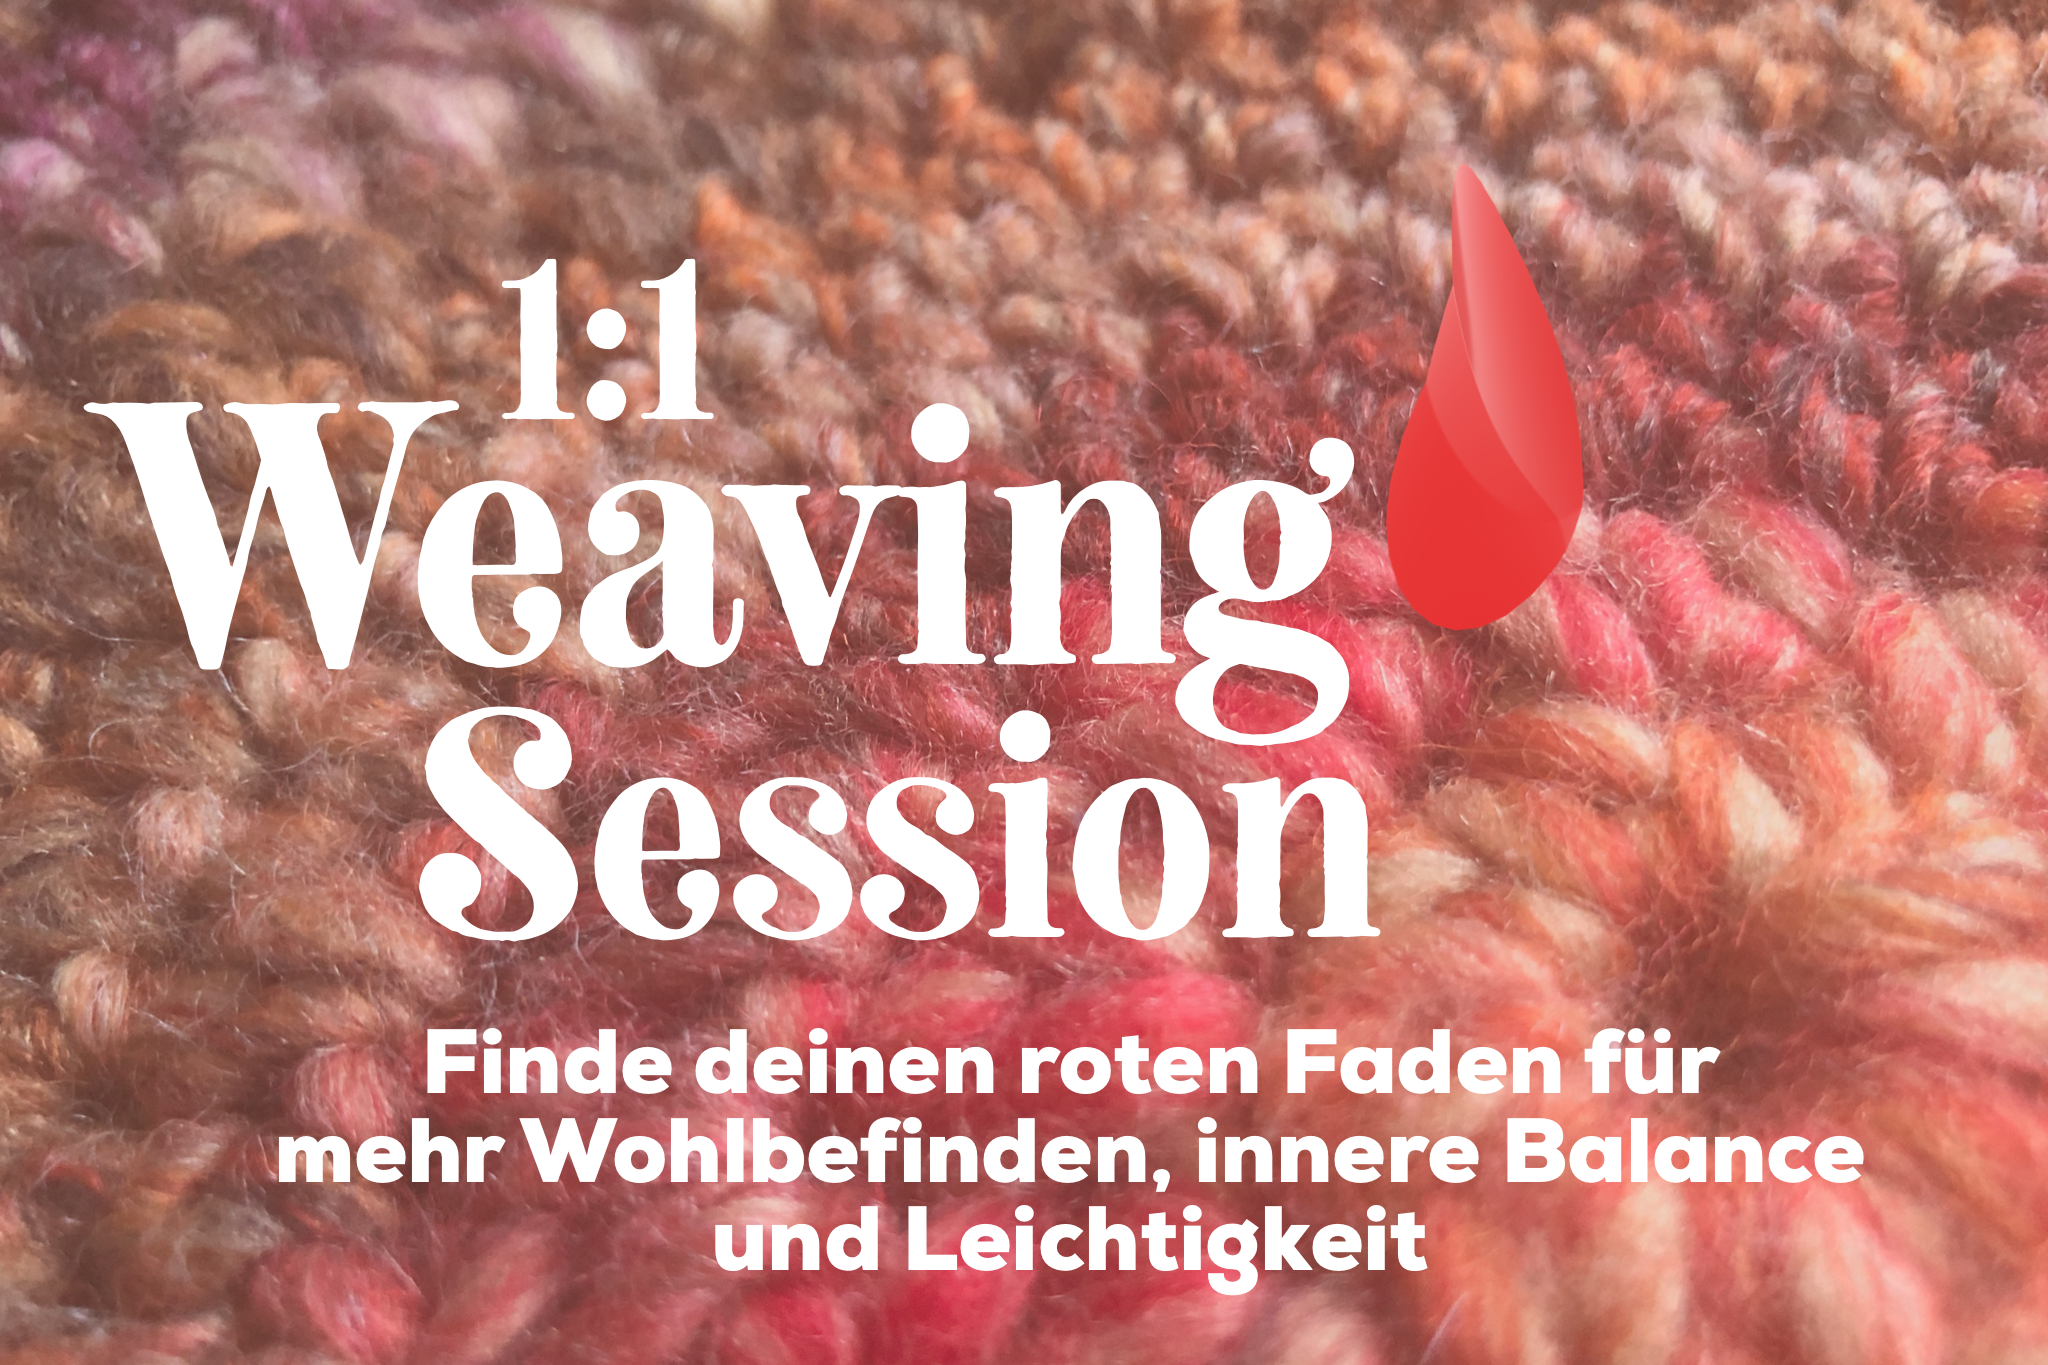 1:1 Weaving-Session